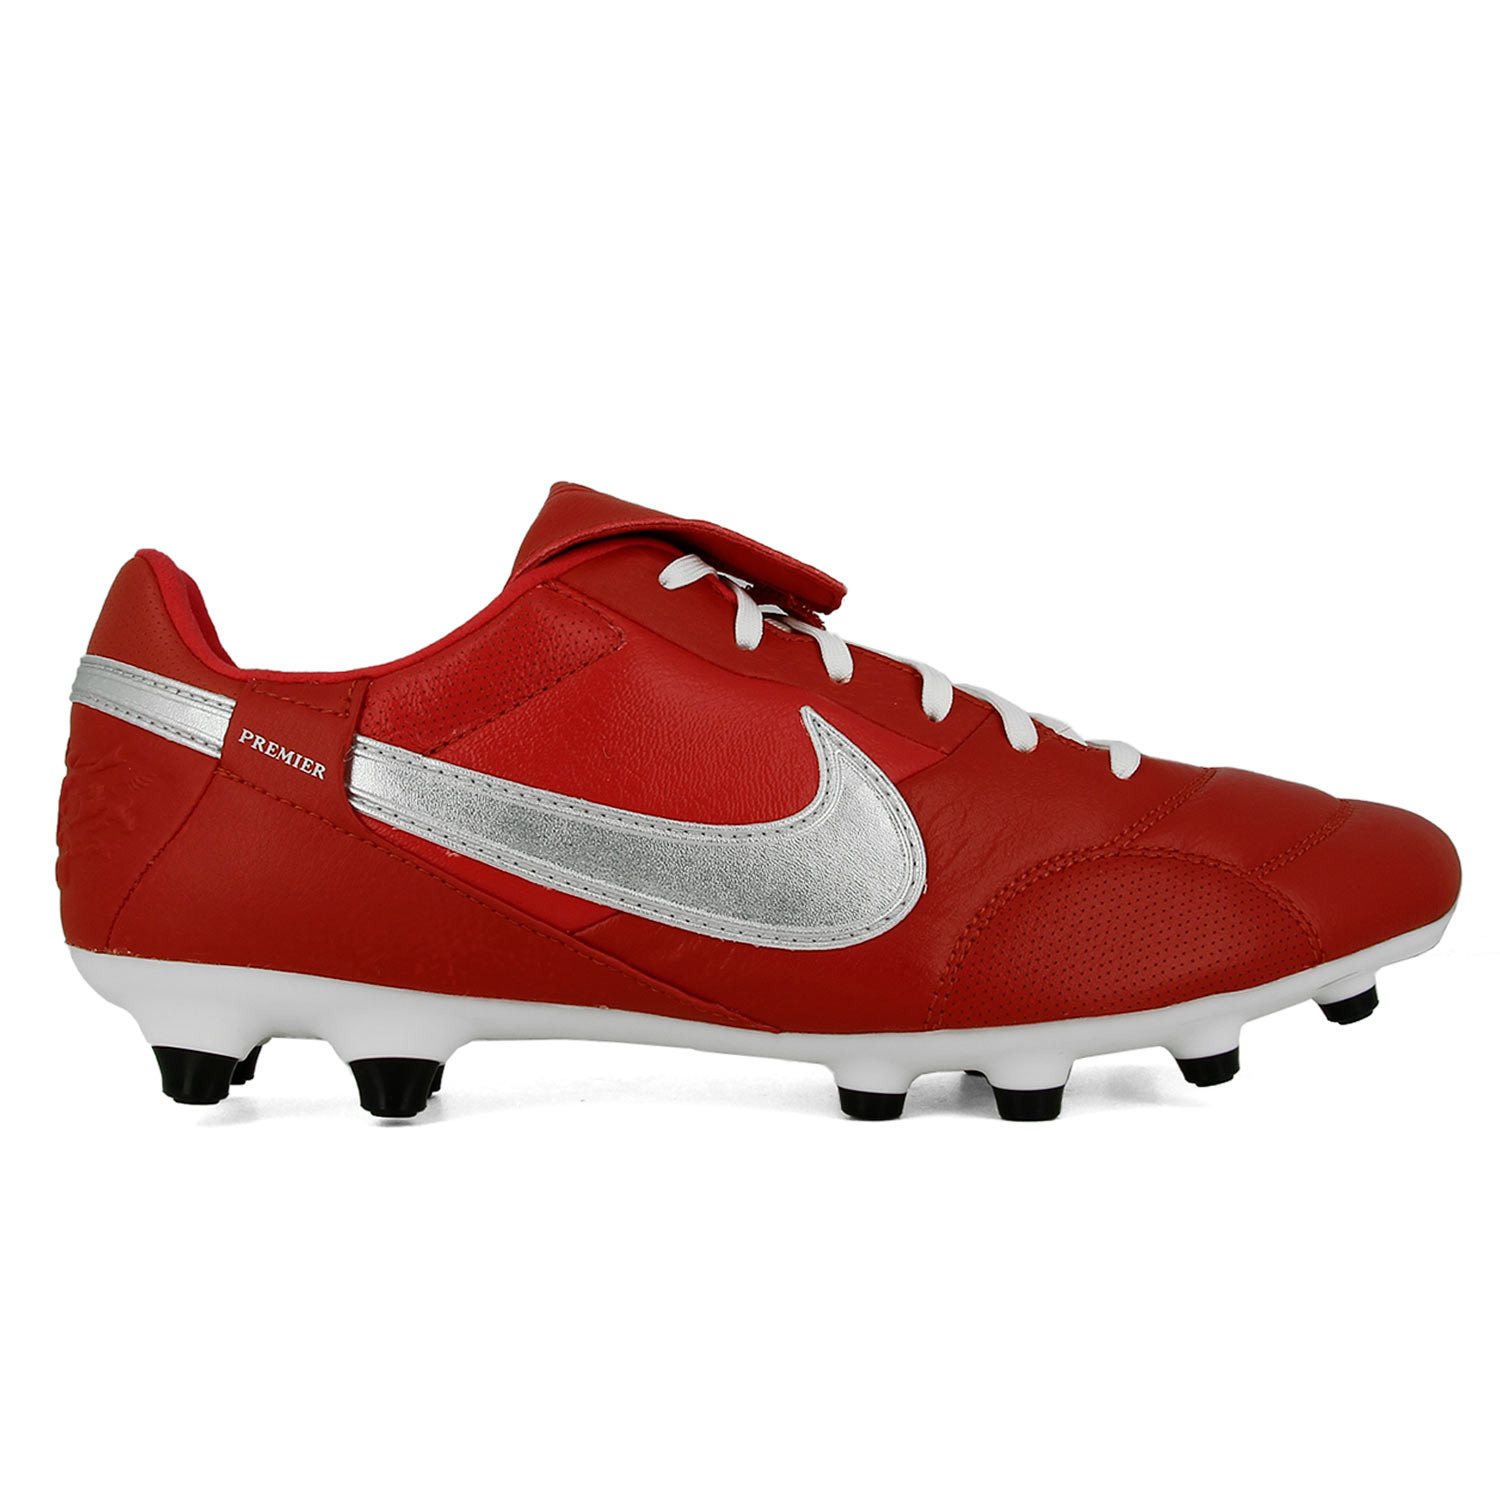 Reactor flotador Insistir Botas de fútbol Nike Premier 3 FG rojas | futbolmania